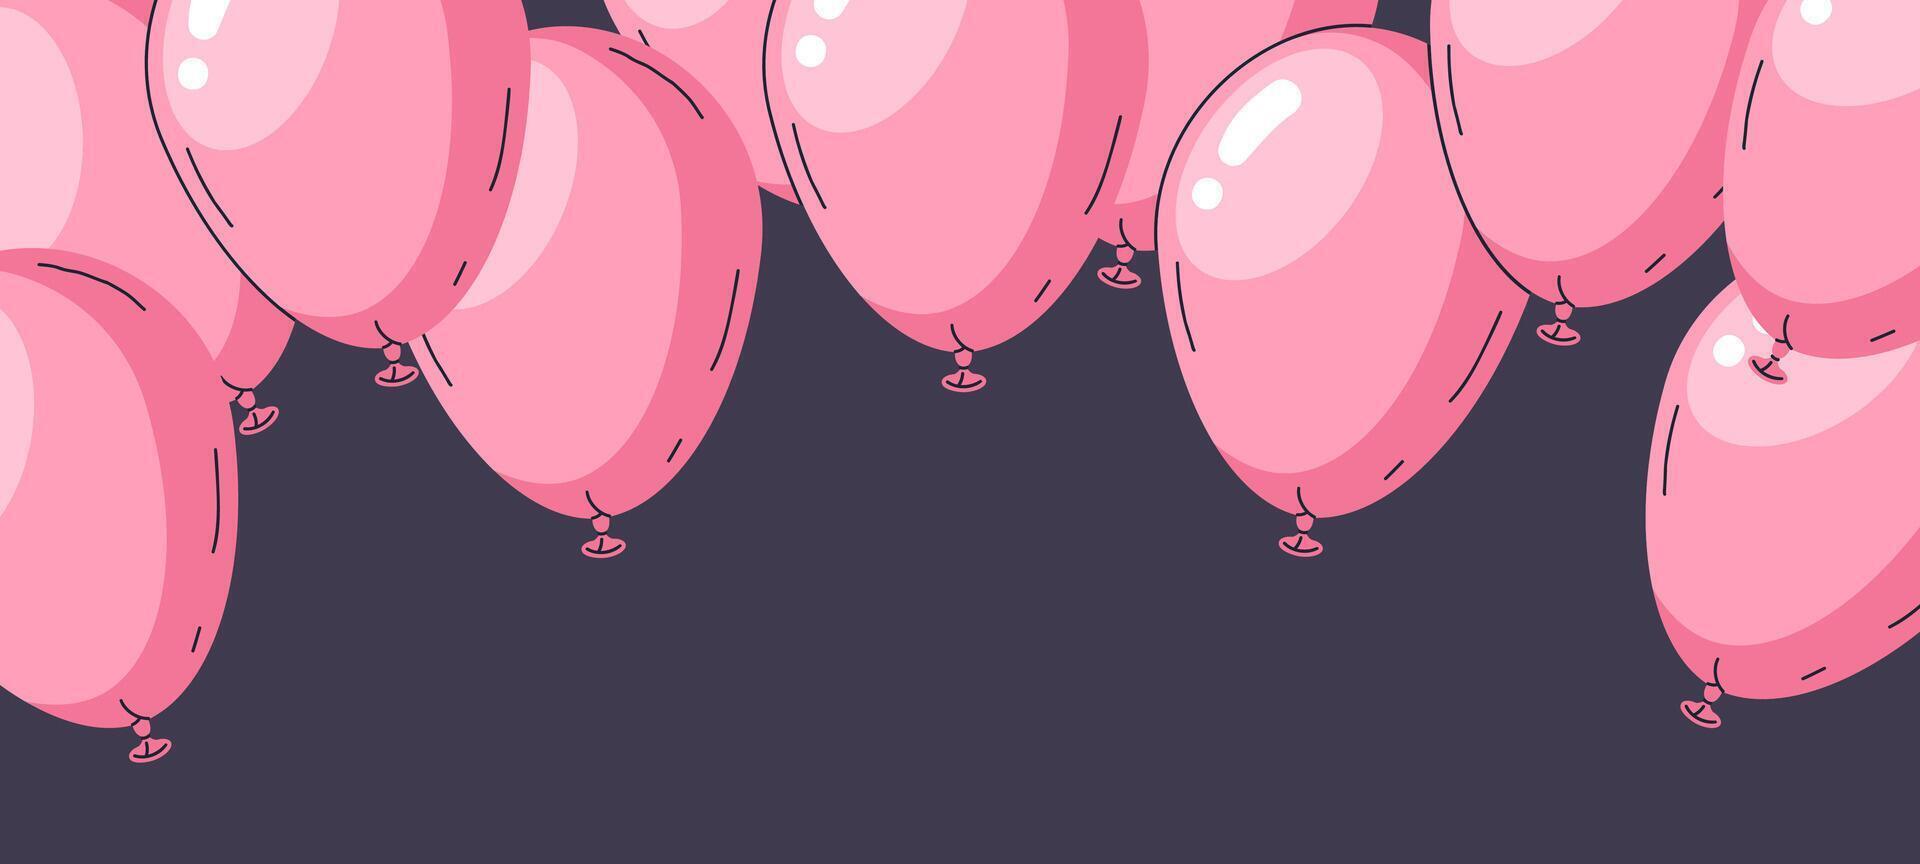 Pink balloons background. Cartoon glossy pink balloons Birthday party decor, holidays air balloon decorations flat backdrop illustration. Hand drawn helium balloons design vector